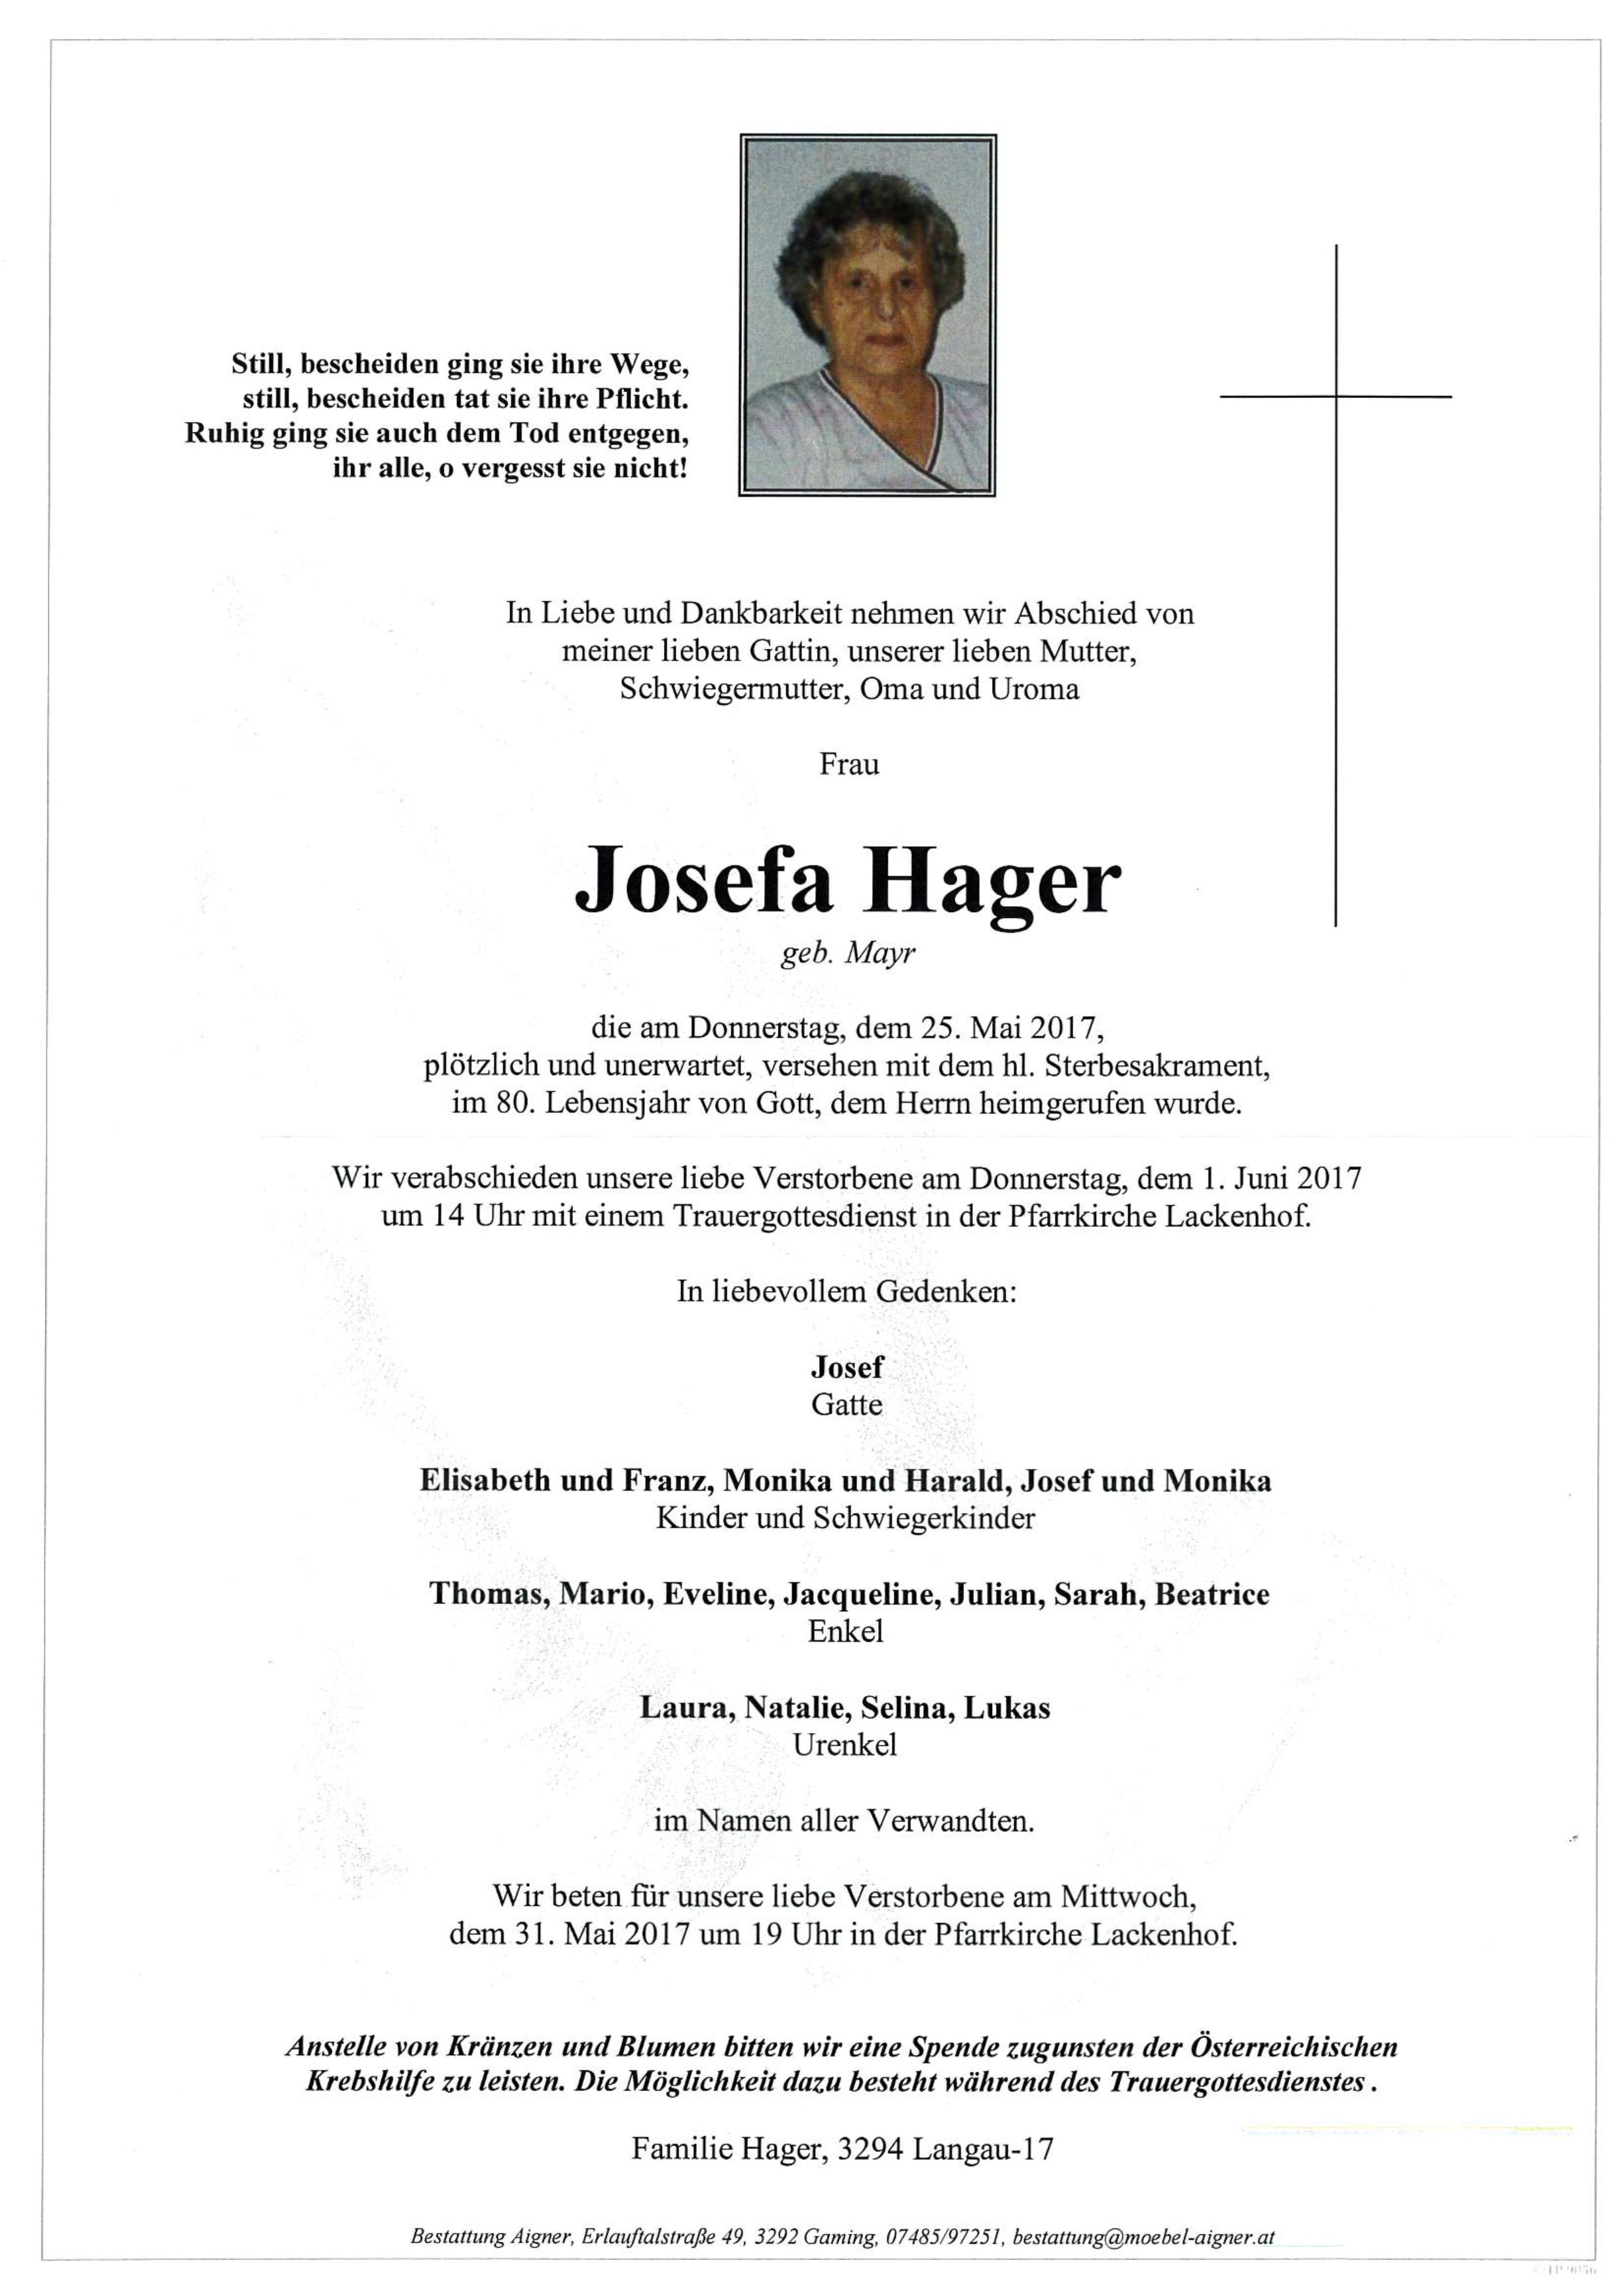 Josefa Hager